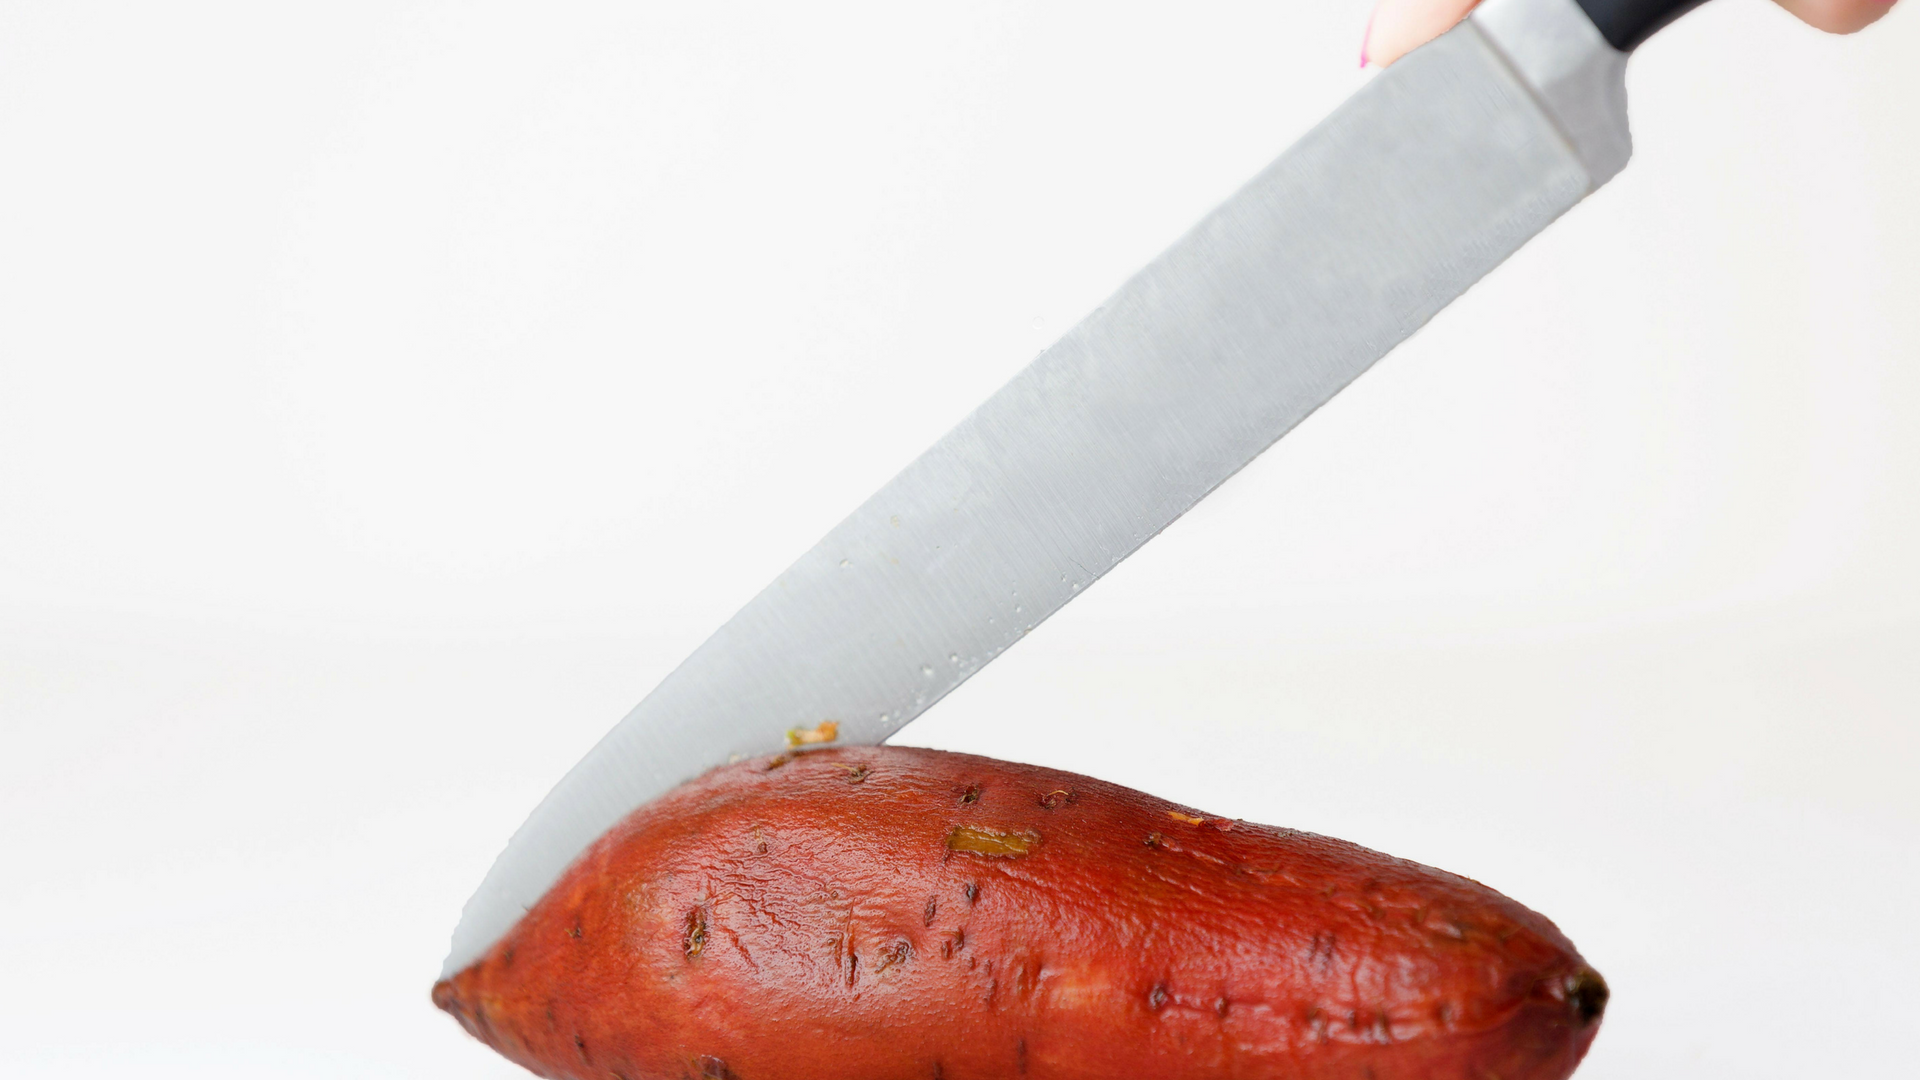 Knife slicing sweet potato